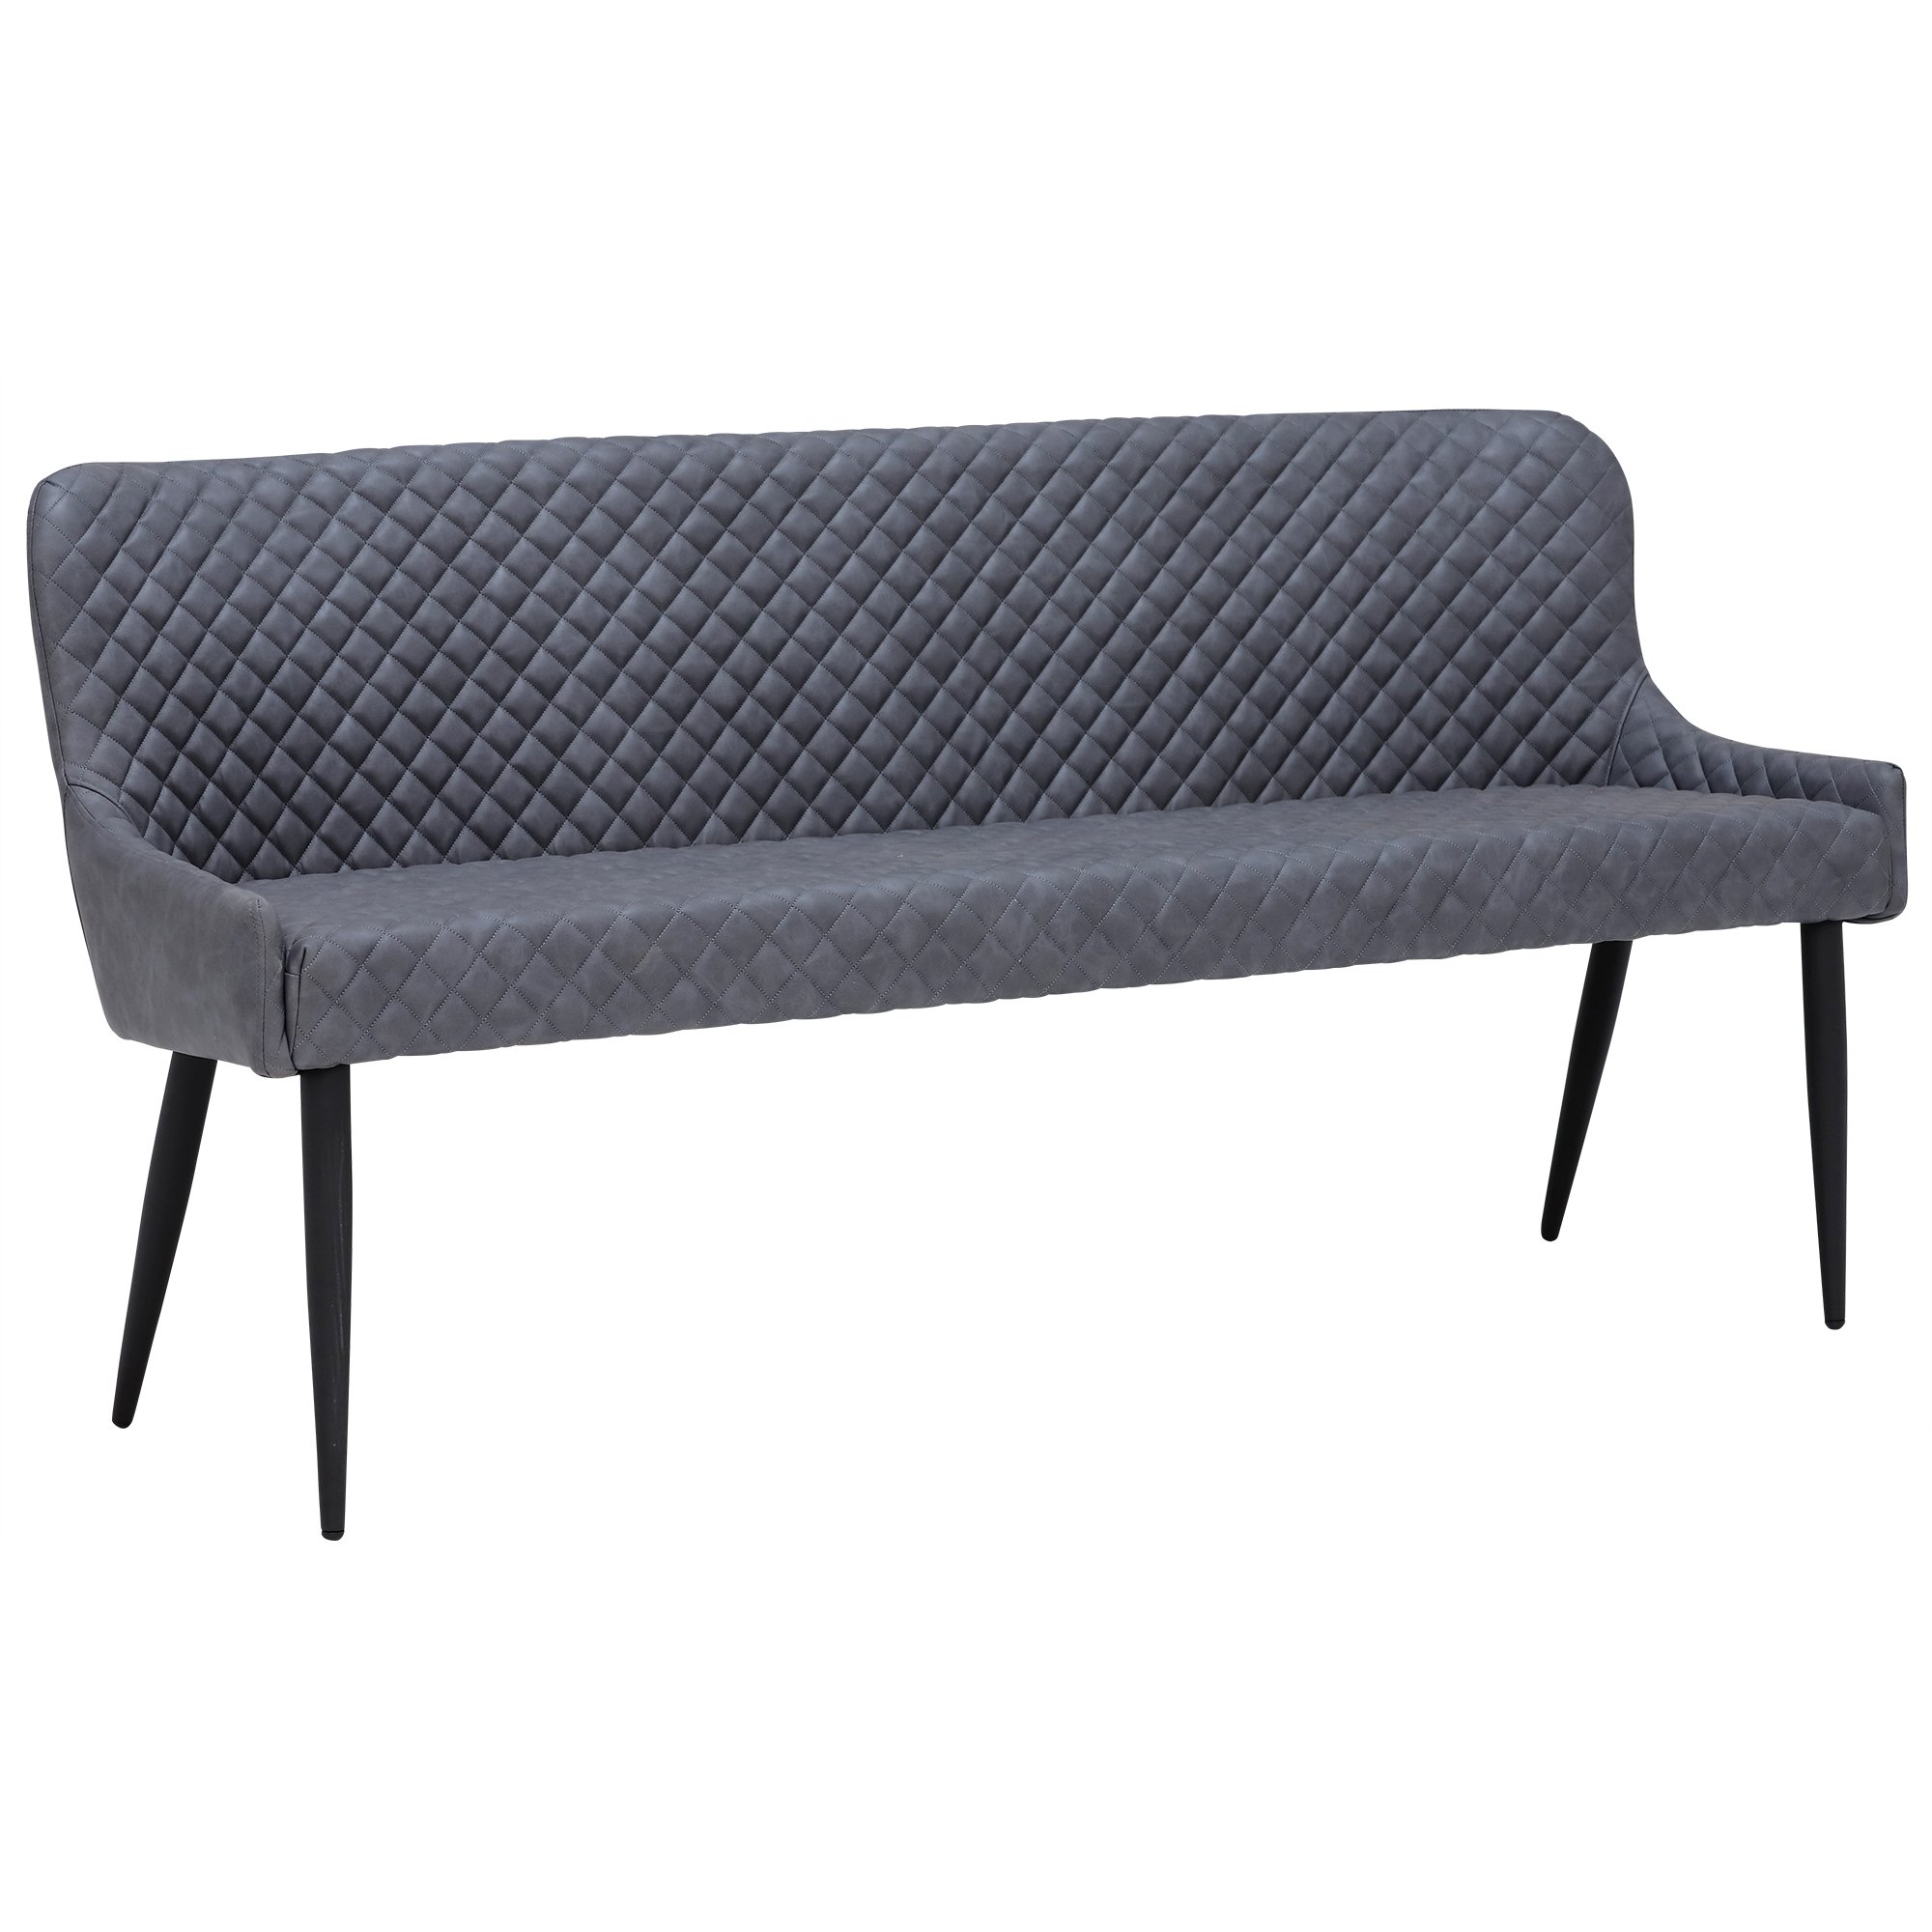 Rivington Sofa Bench 160cm, Grey | Barker & Stonehouse